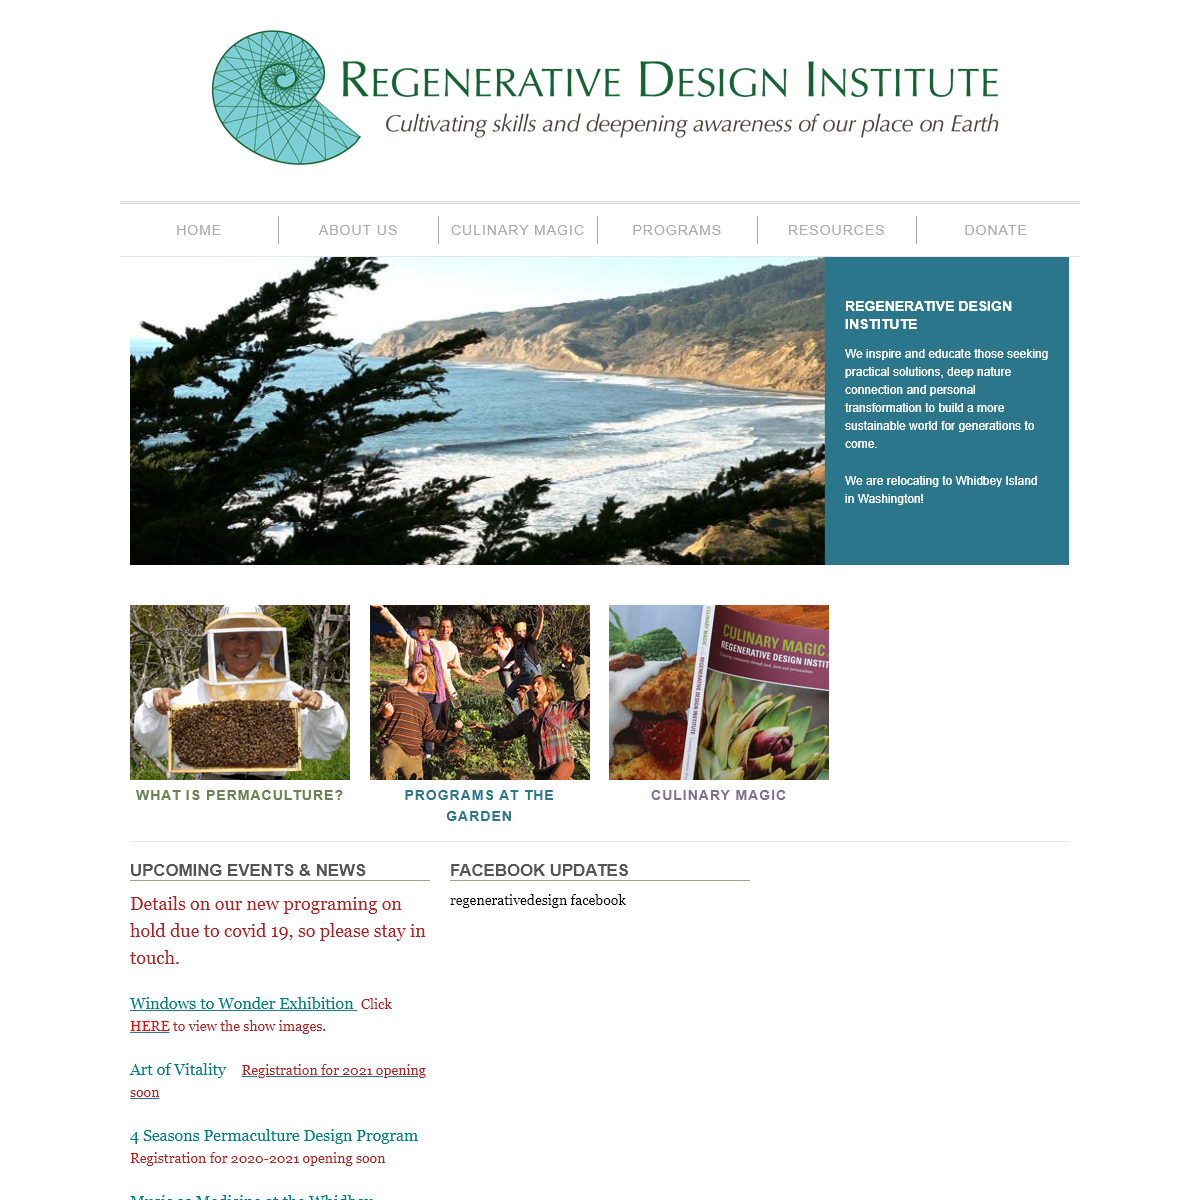 A complete backup of regenerativedesign.org